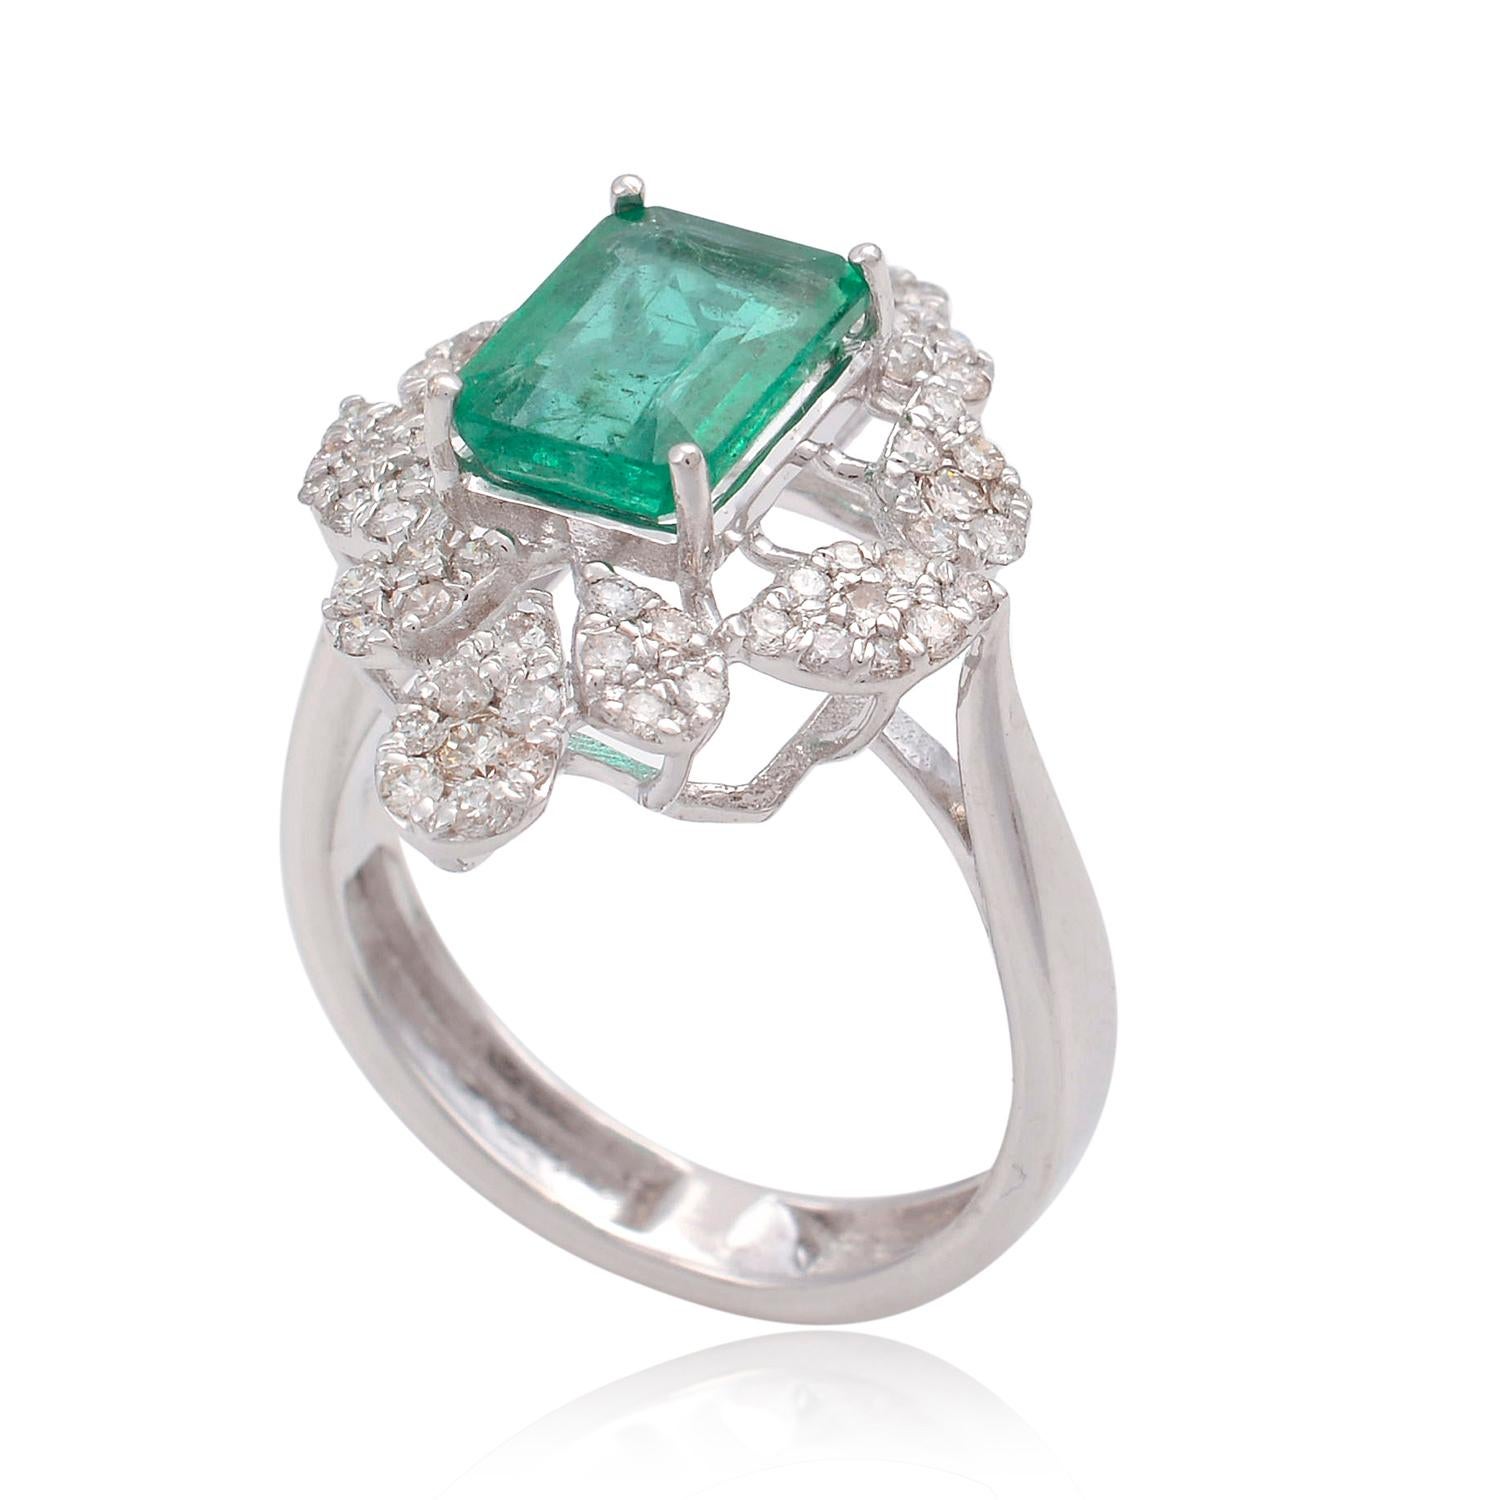 Emerald Cut Zambian Emerald Gemstone Cocktail Ring Diamond 18 Karat White Gold Fine Jewelry For Sale